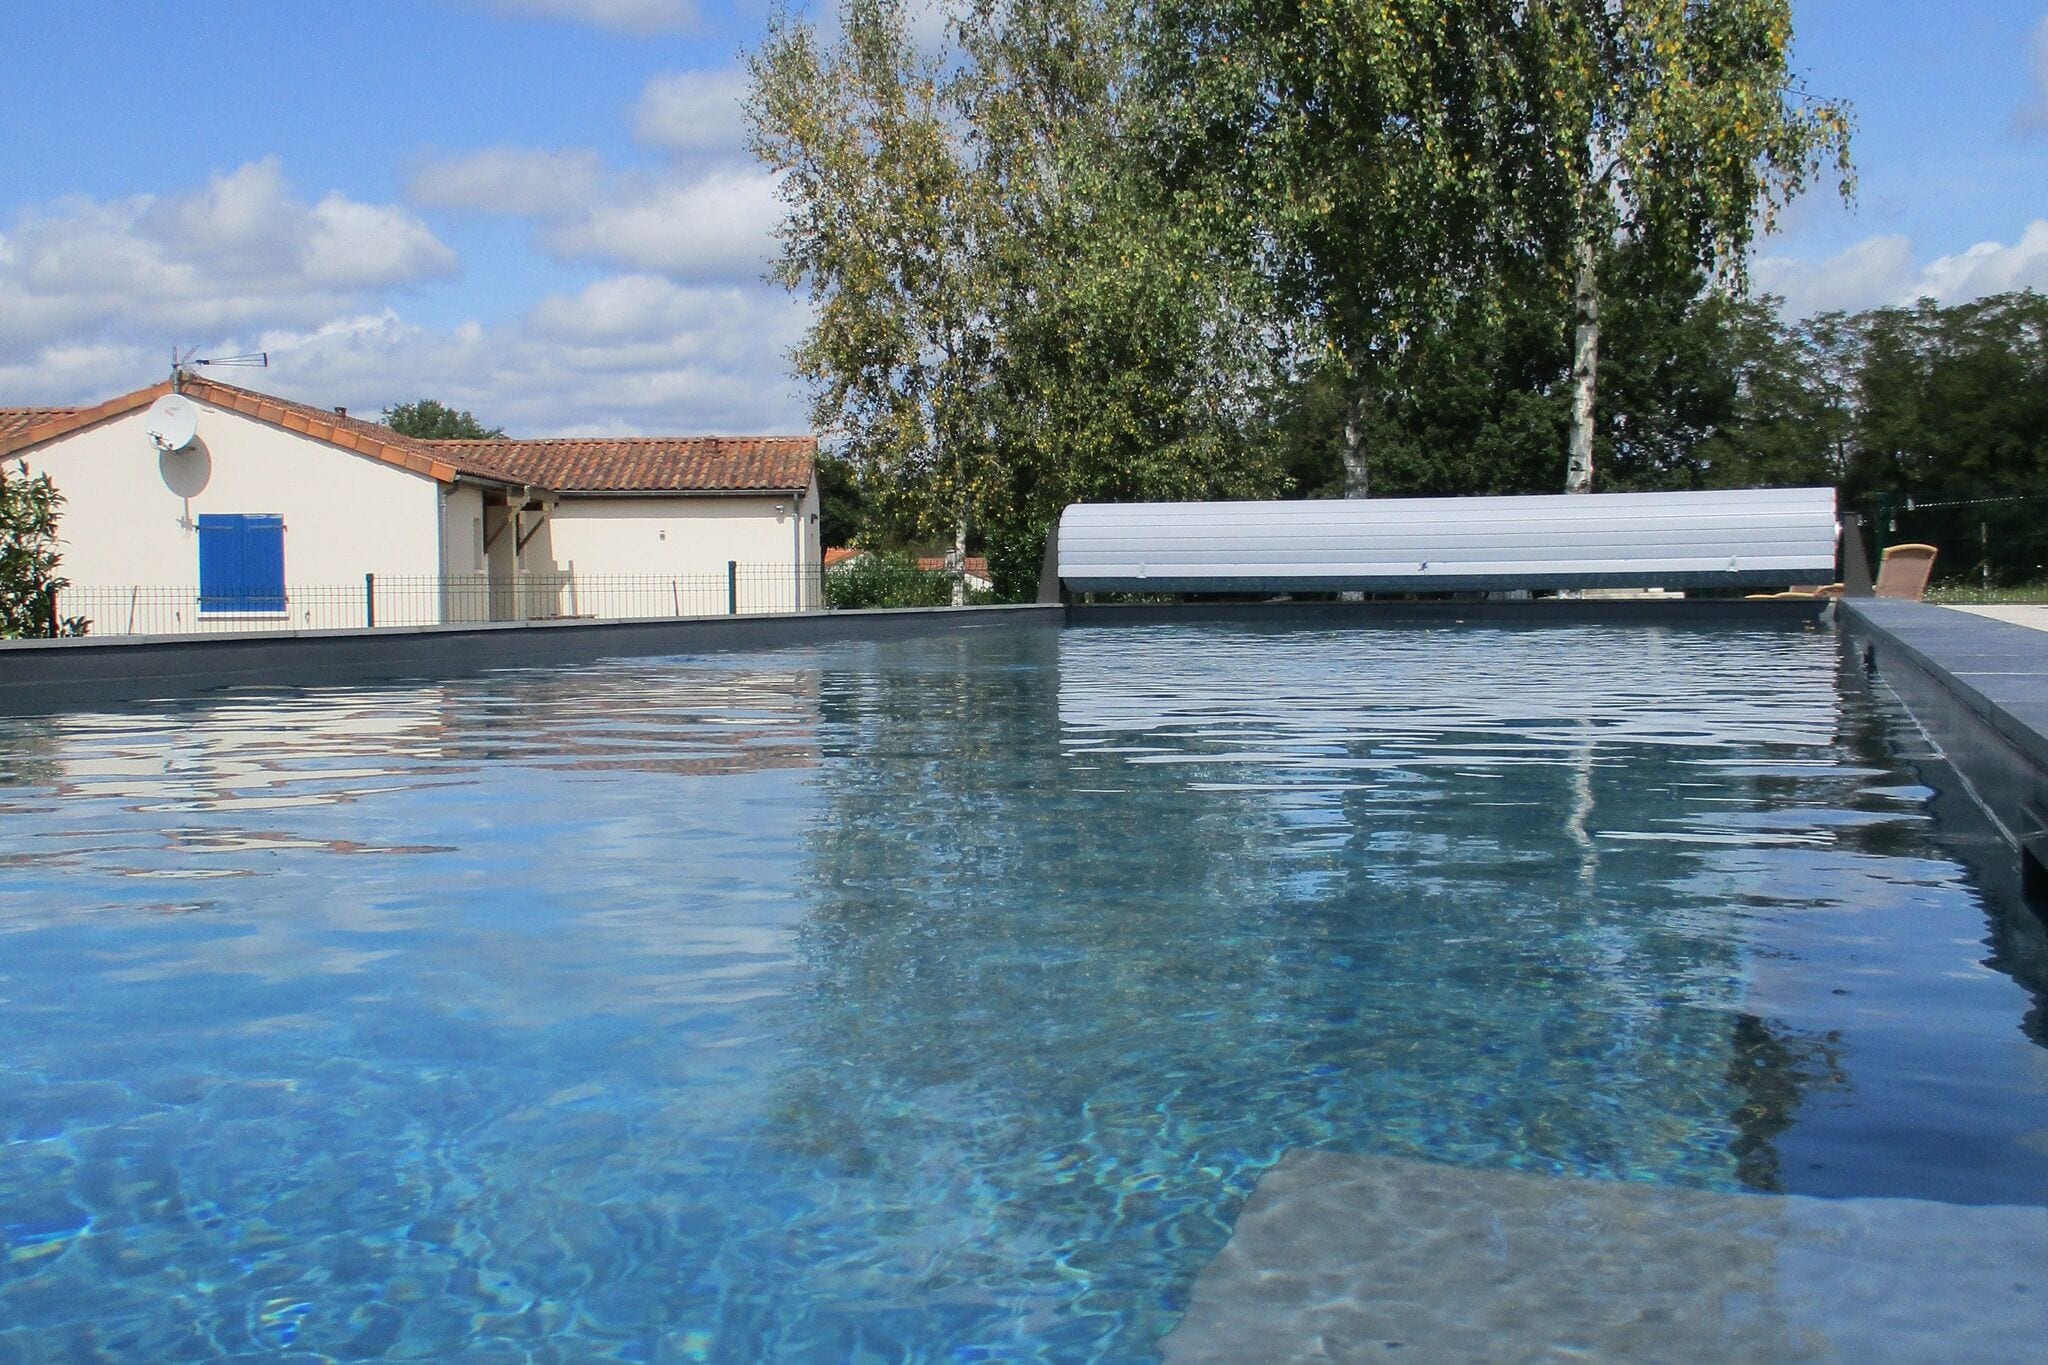 Verwarmd privézwembad Villa in Les Forges, naast de 27-holes golfbaan